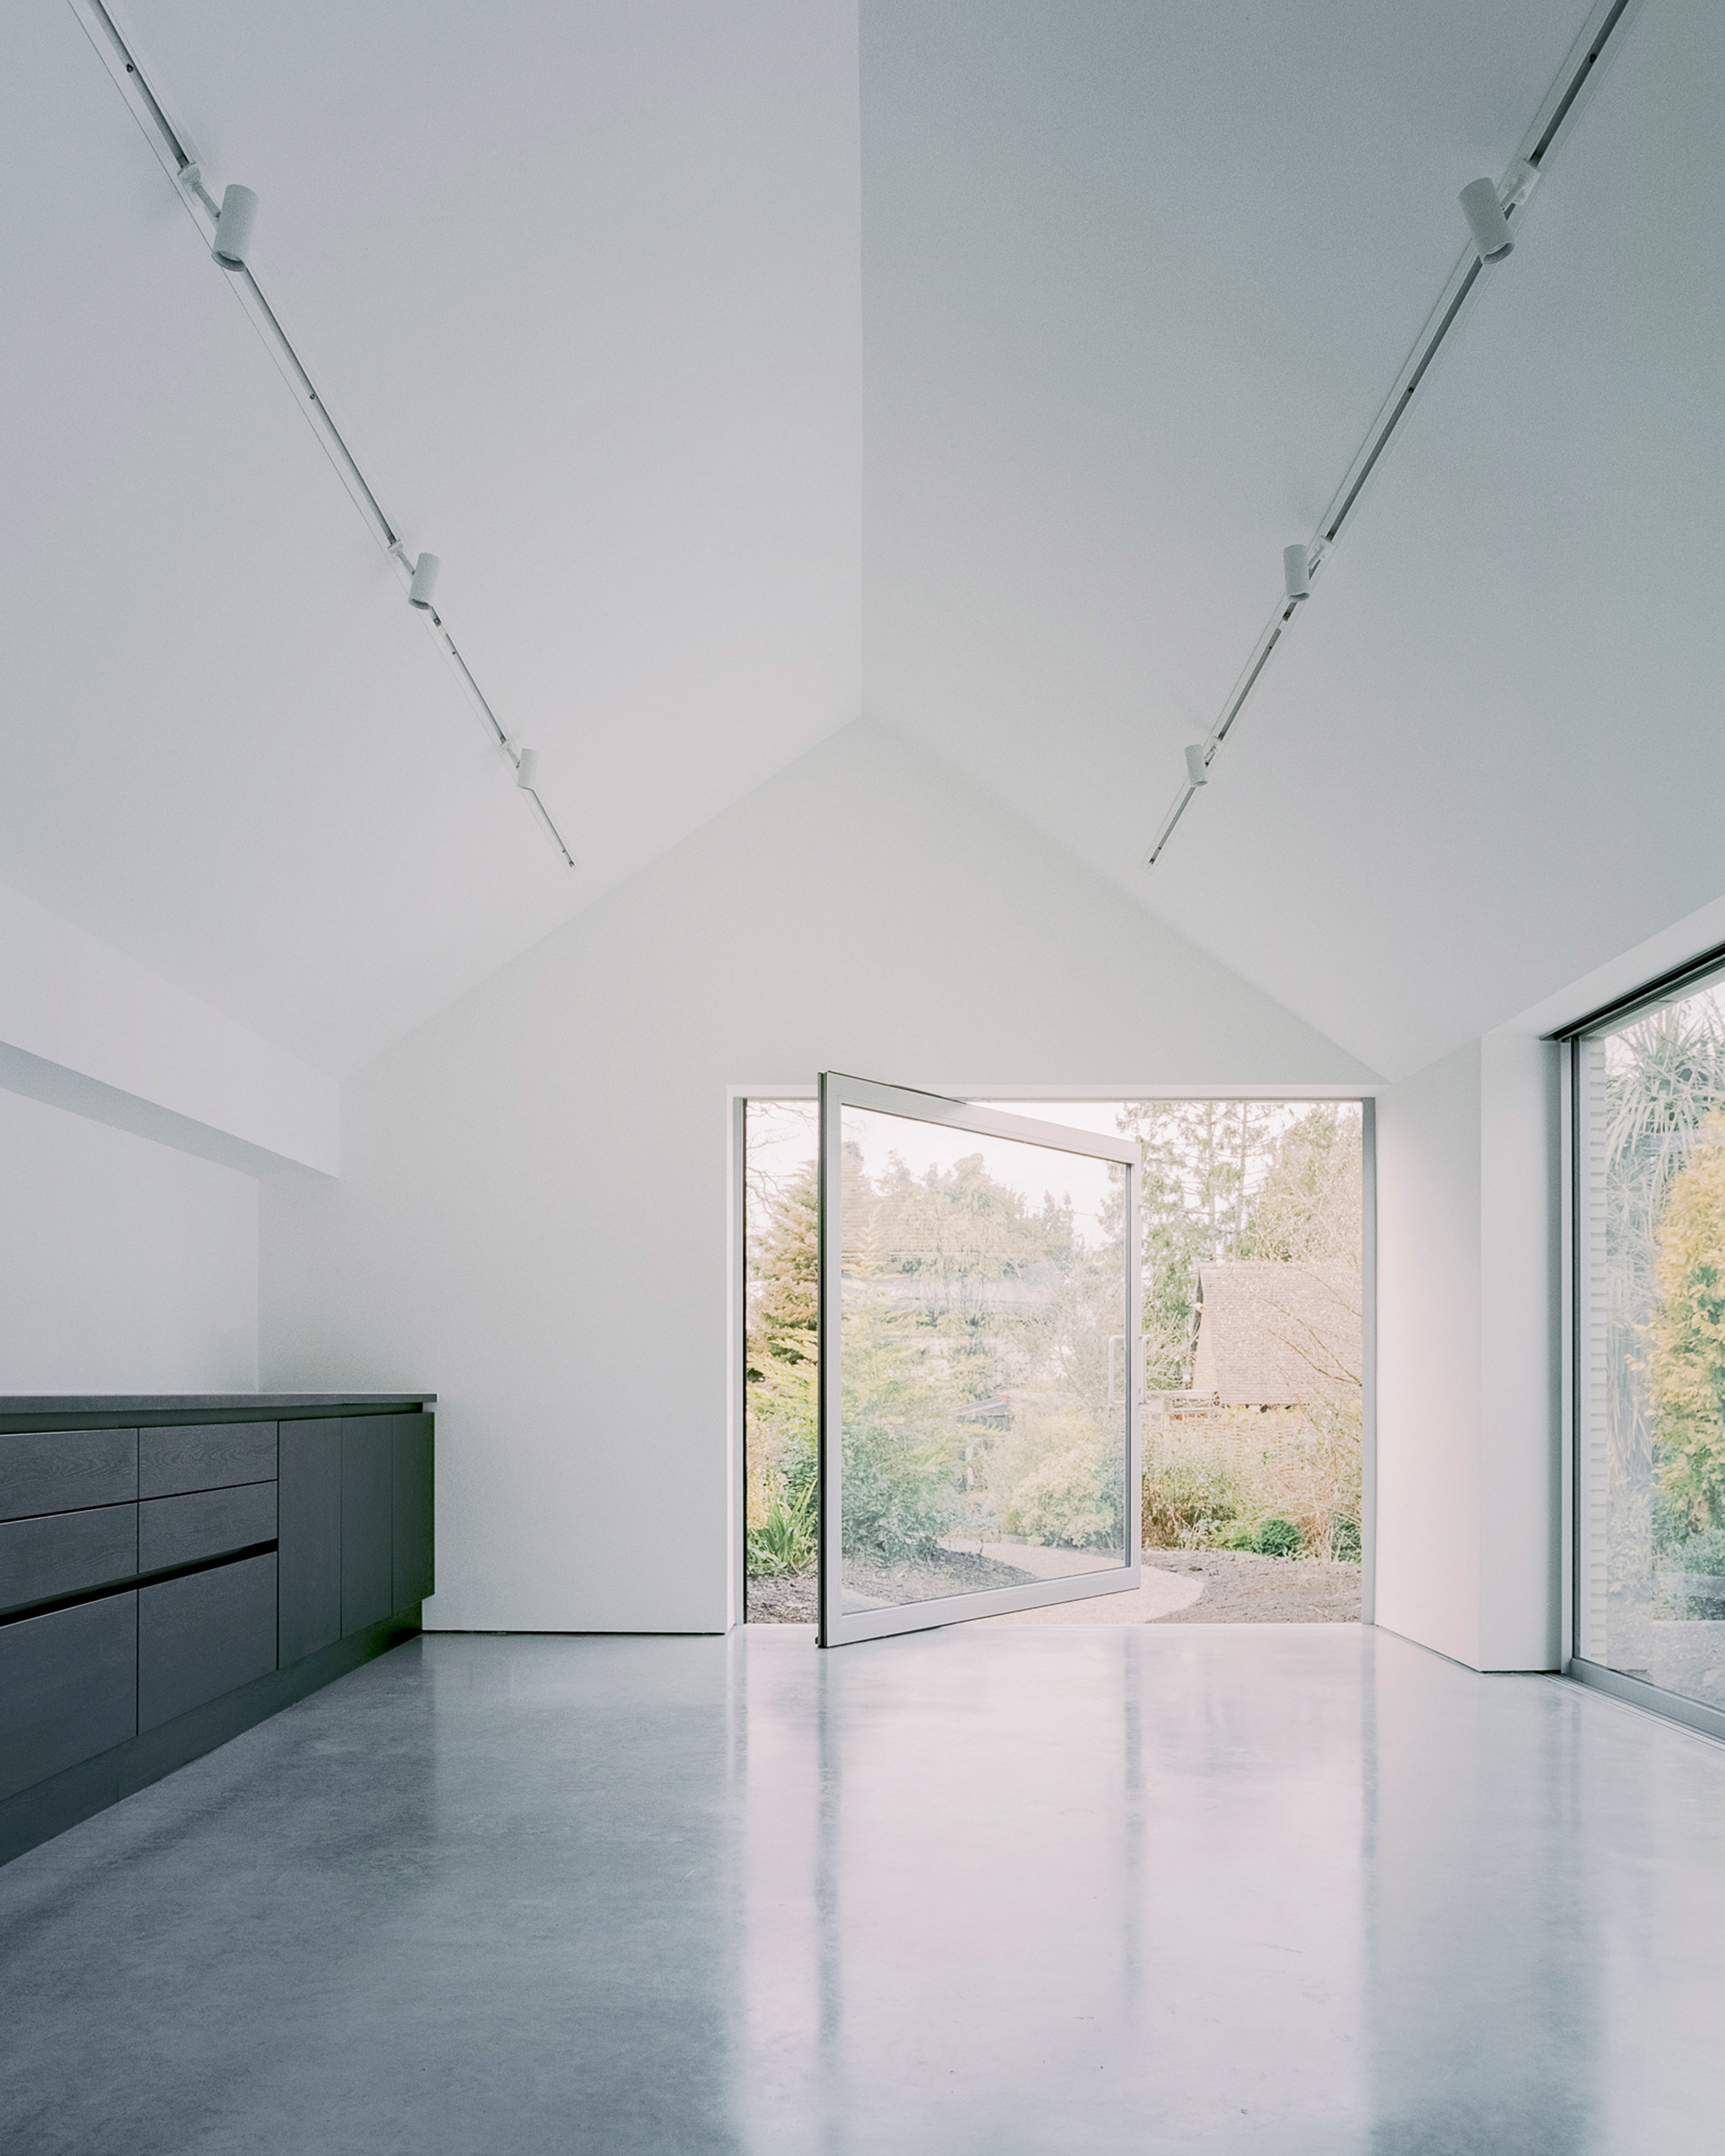 Over The Edge minimalist house by Jonathan Burlow kitchen